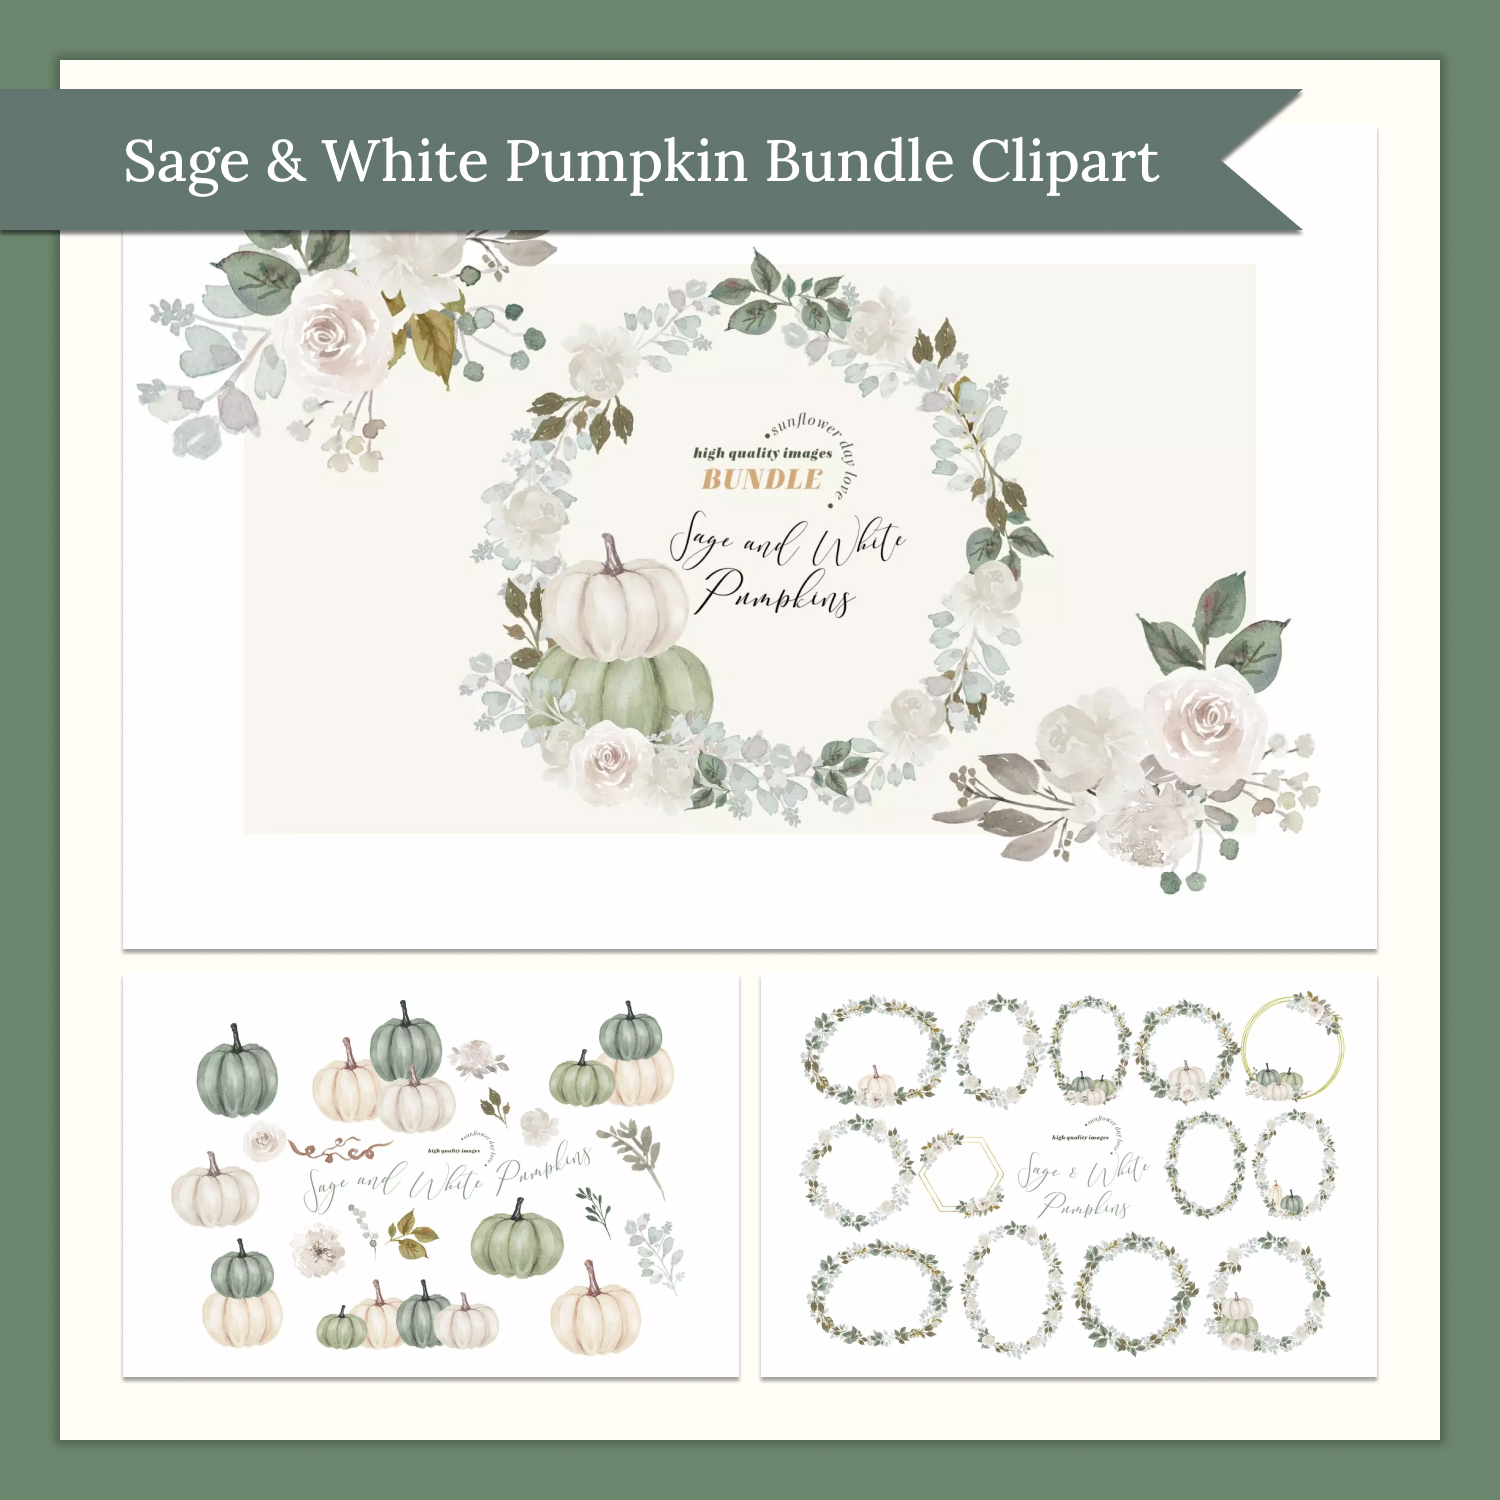 Prints of sage white pumpkin bundle clipart.